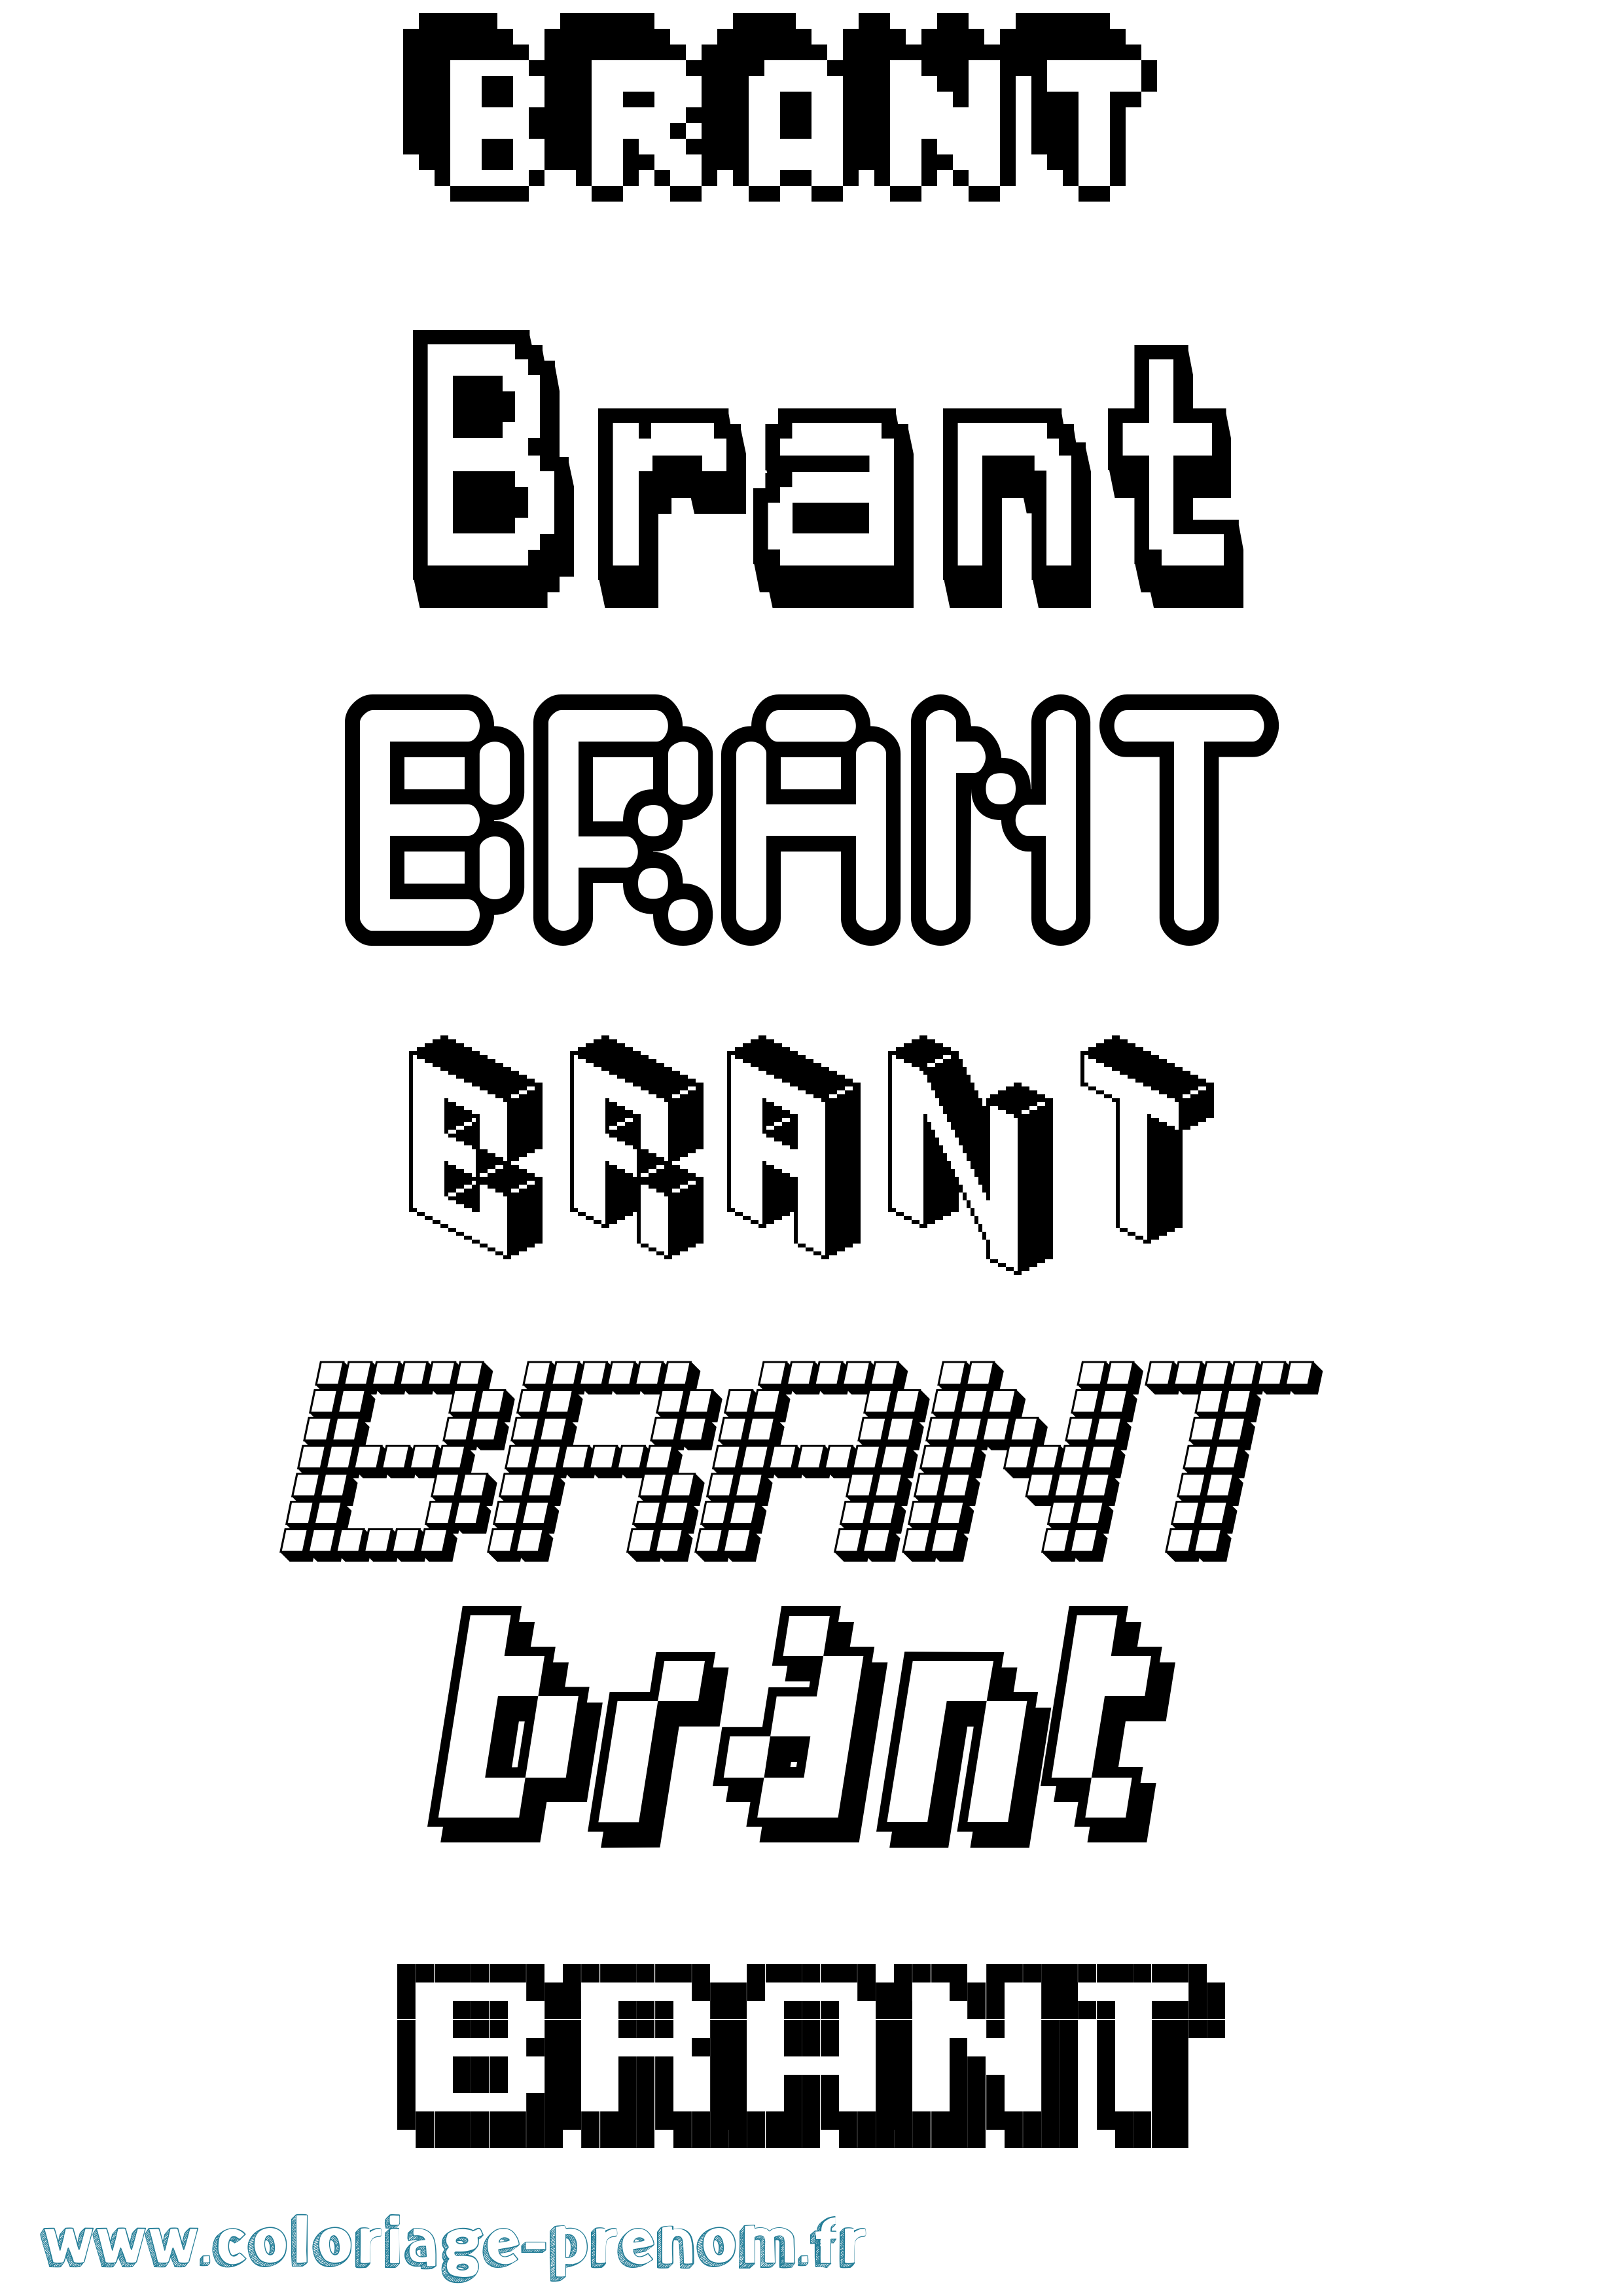 Coloriage prénom Brant Pixel